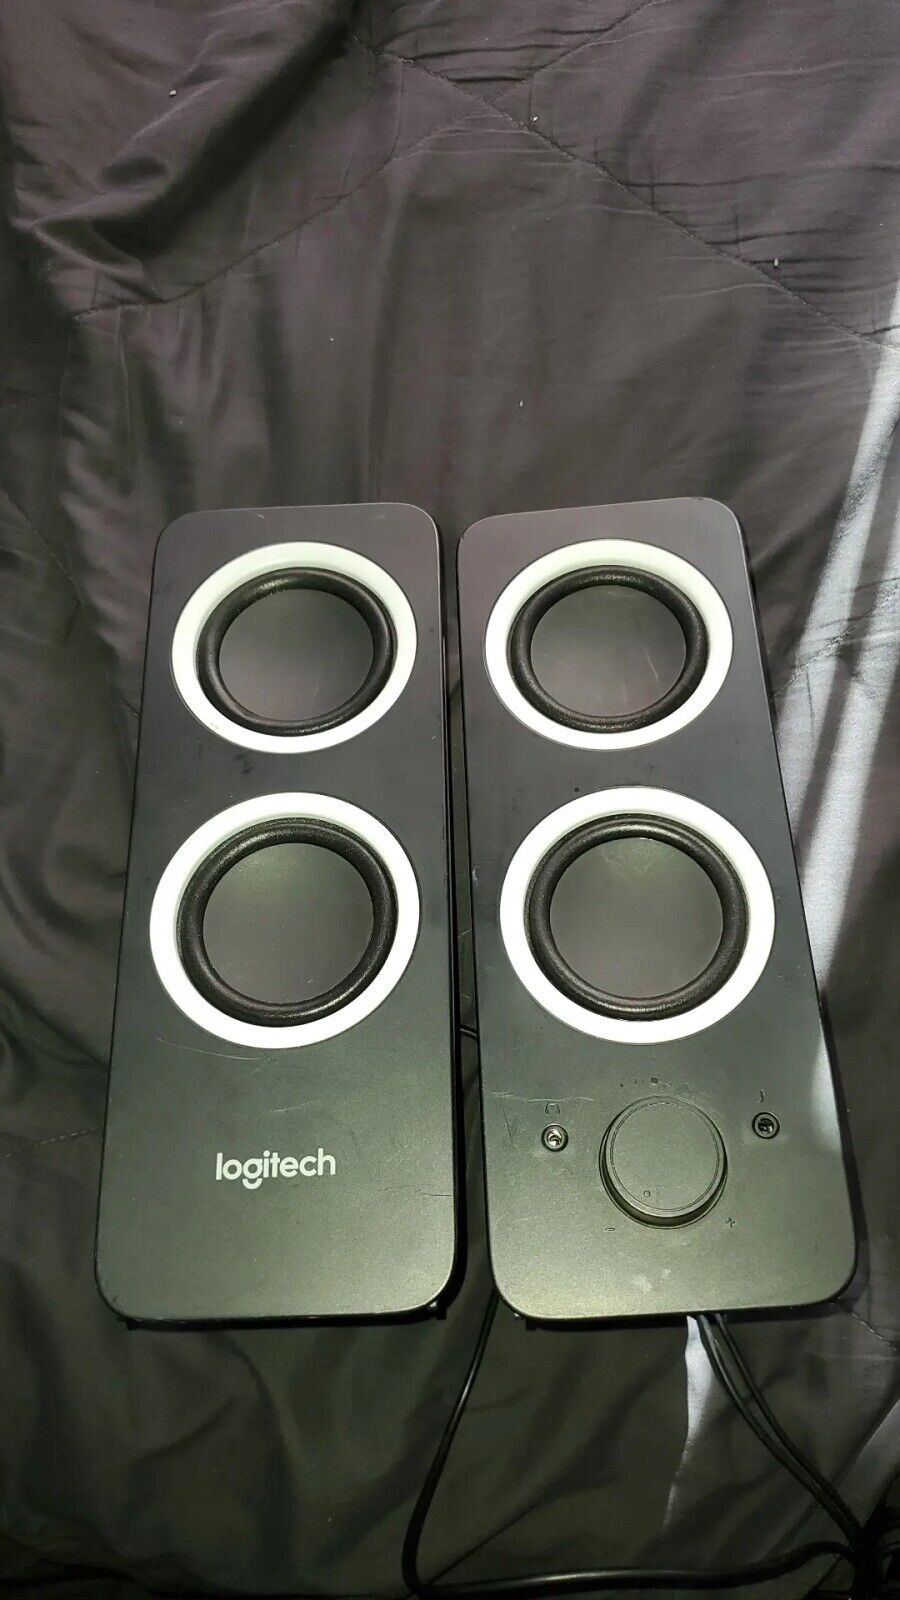 Logitech - Z200 2.0 Multimedia Speakers with Stereo Sound (2-Piece) - Black